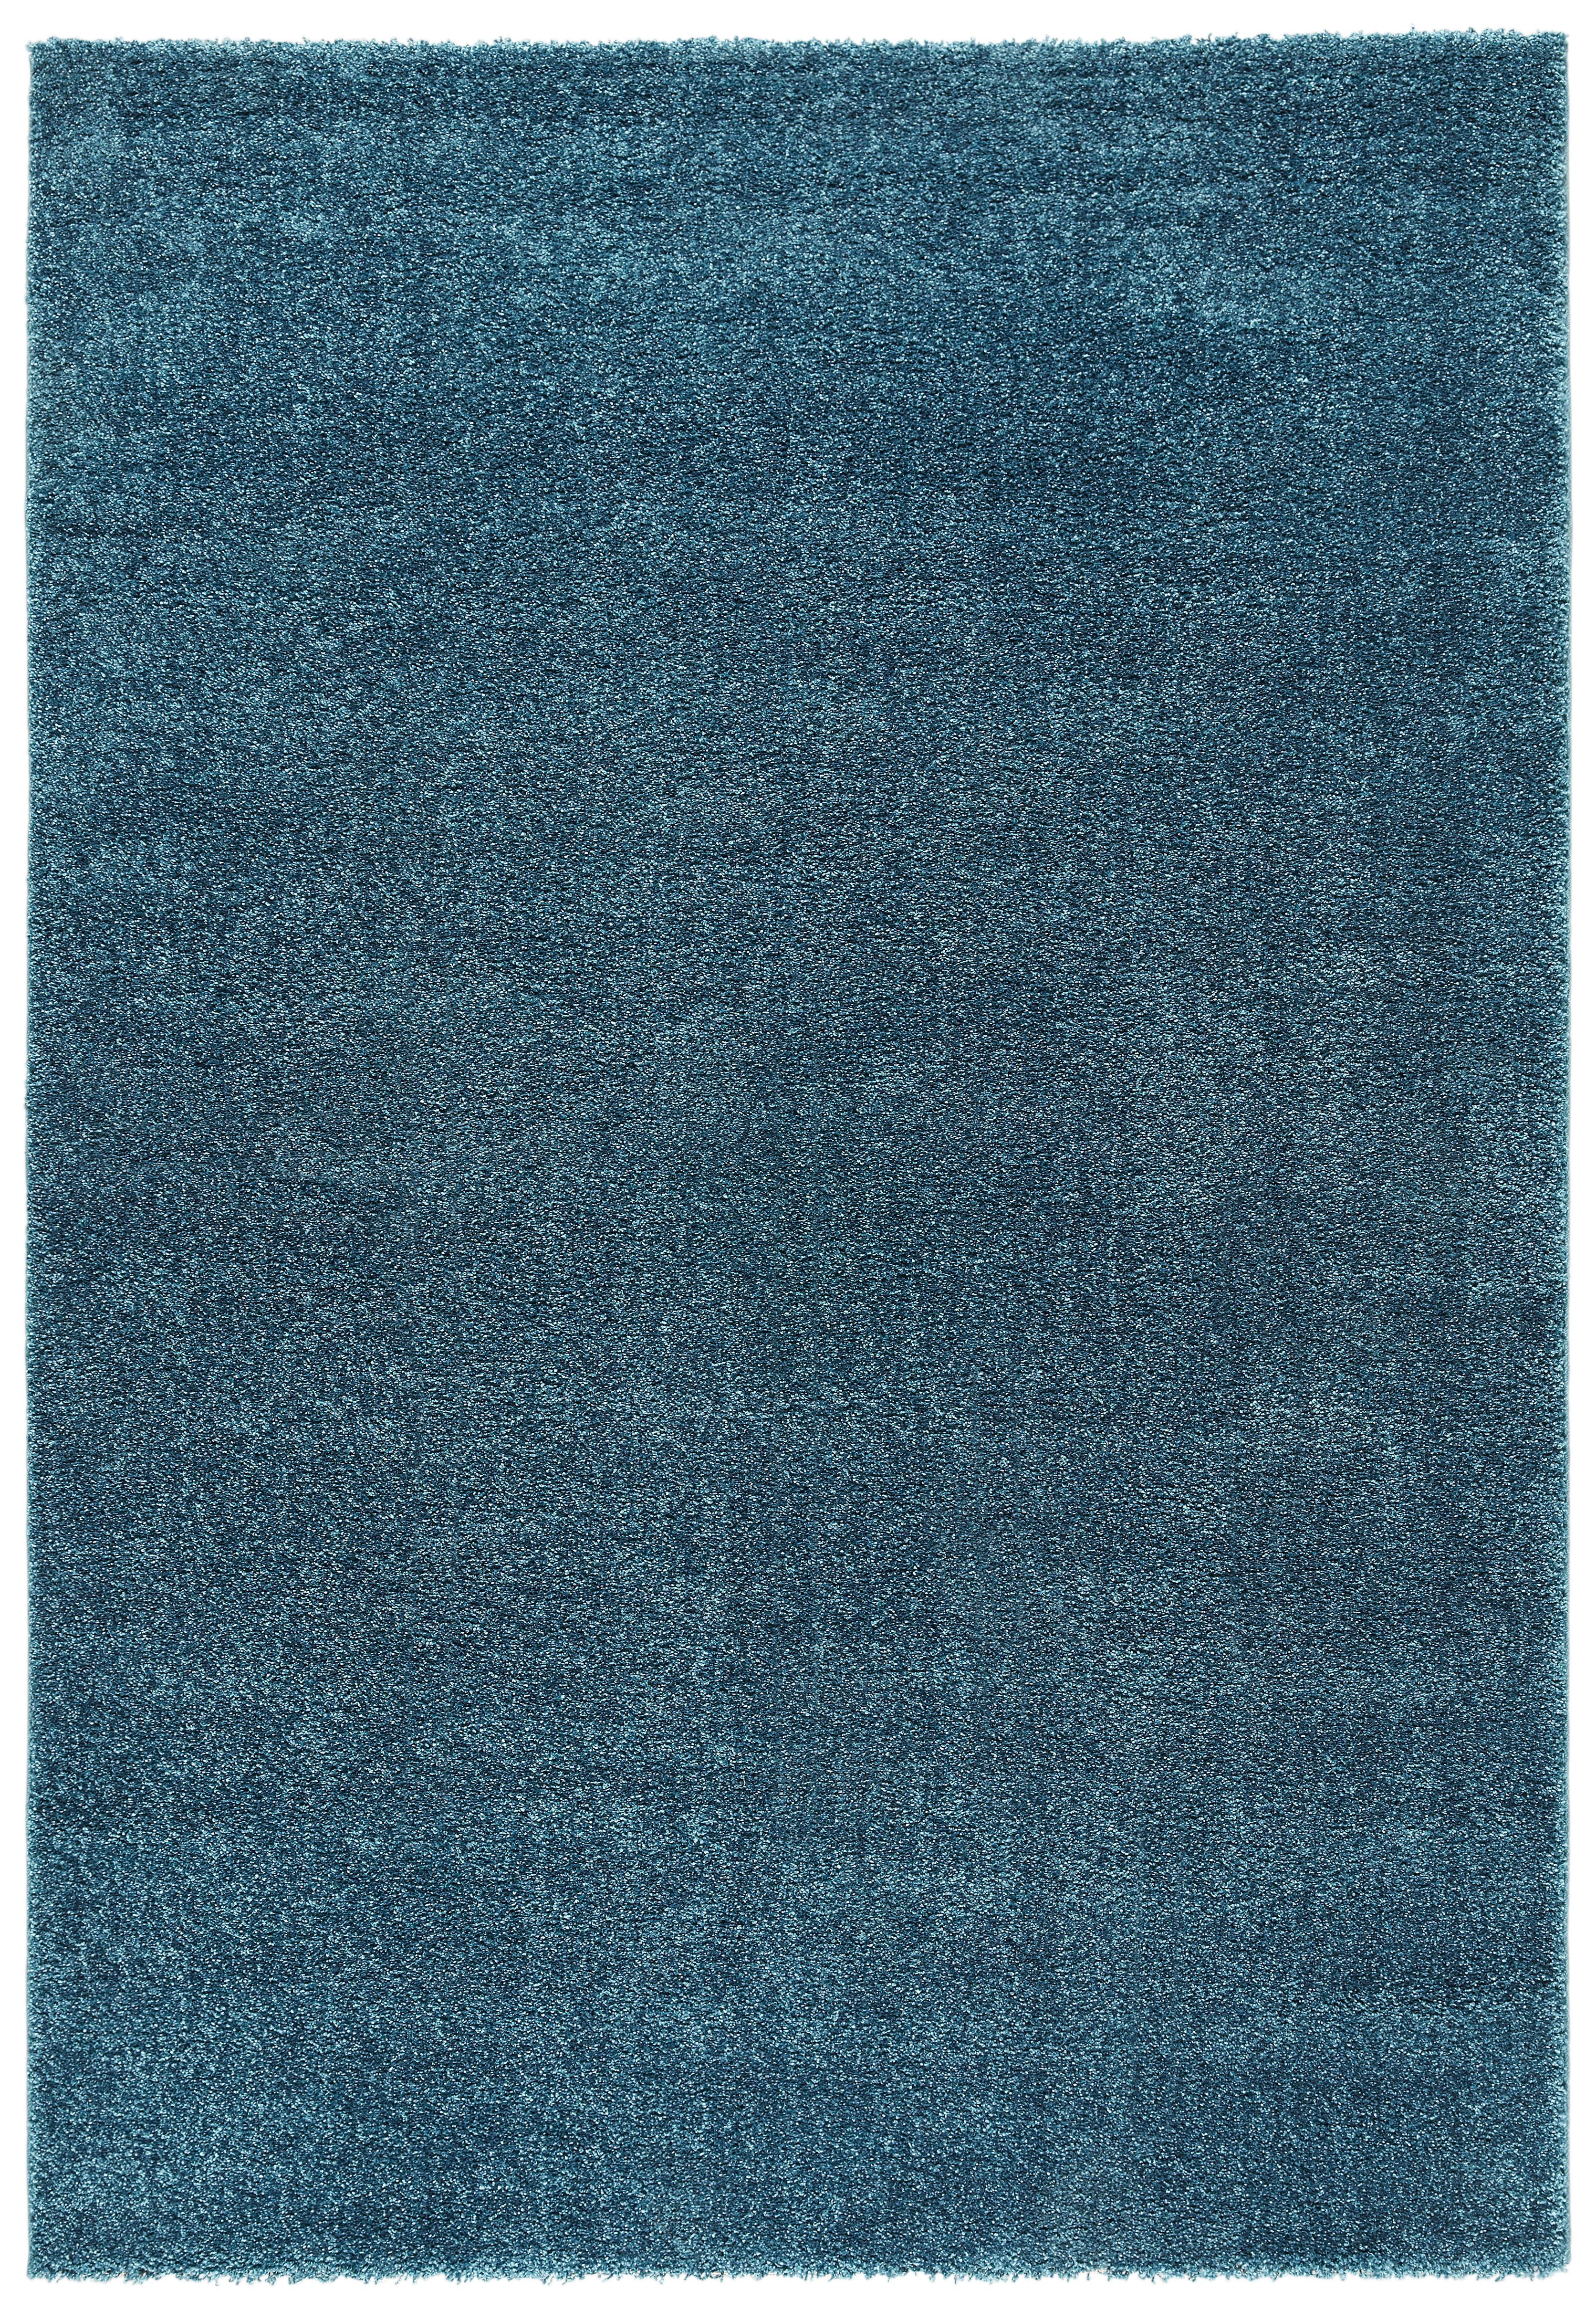 Webteppich Rubin 1 in Blau ca. 80x150cm - Blau, MODERN (80/150cm) - Modern Living